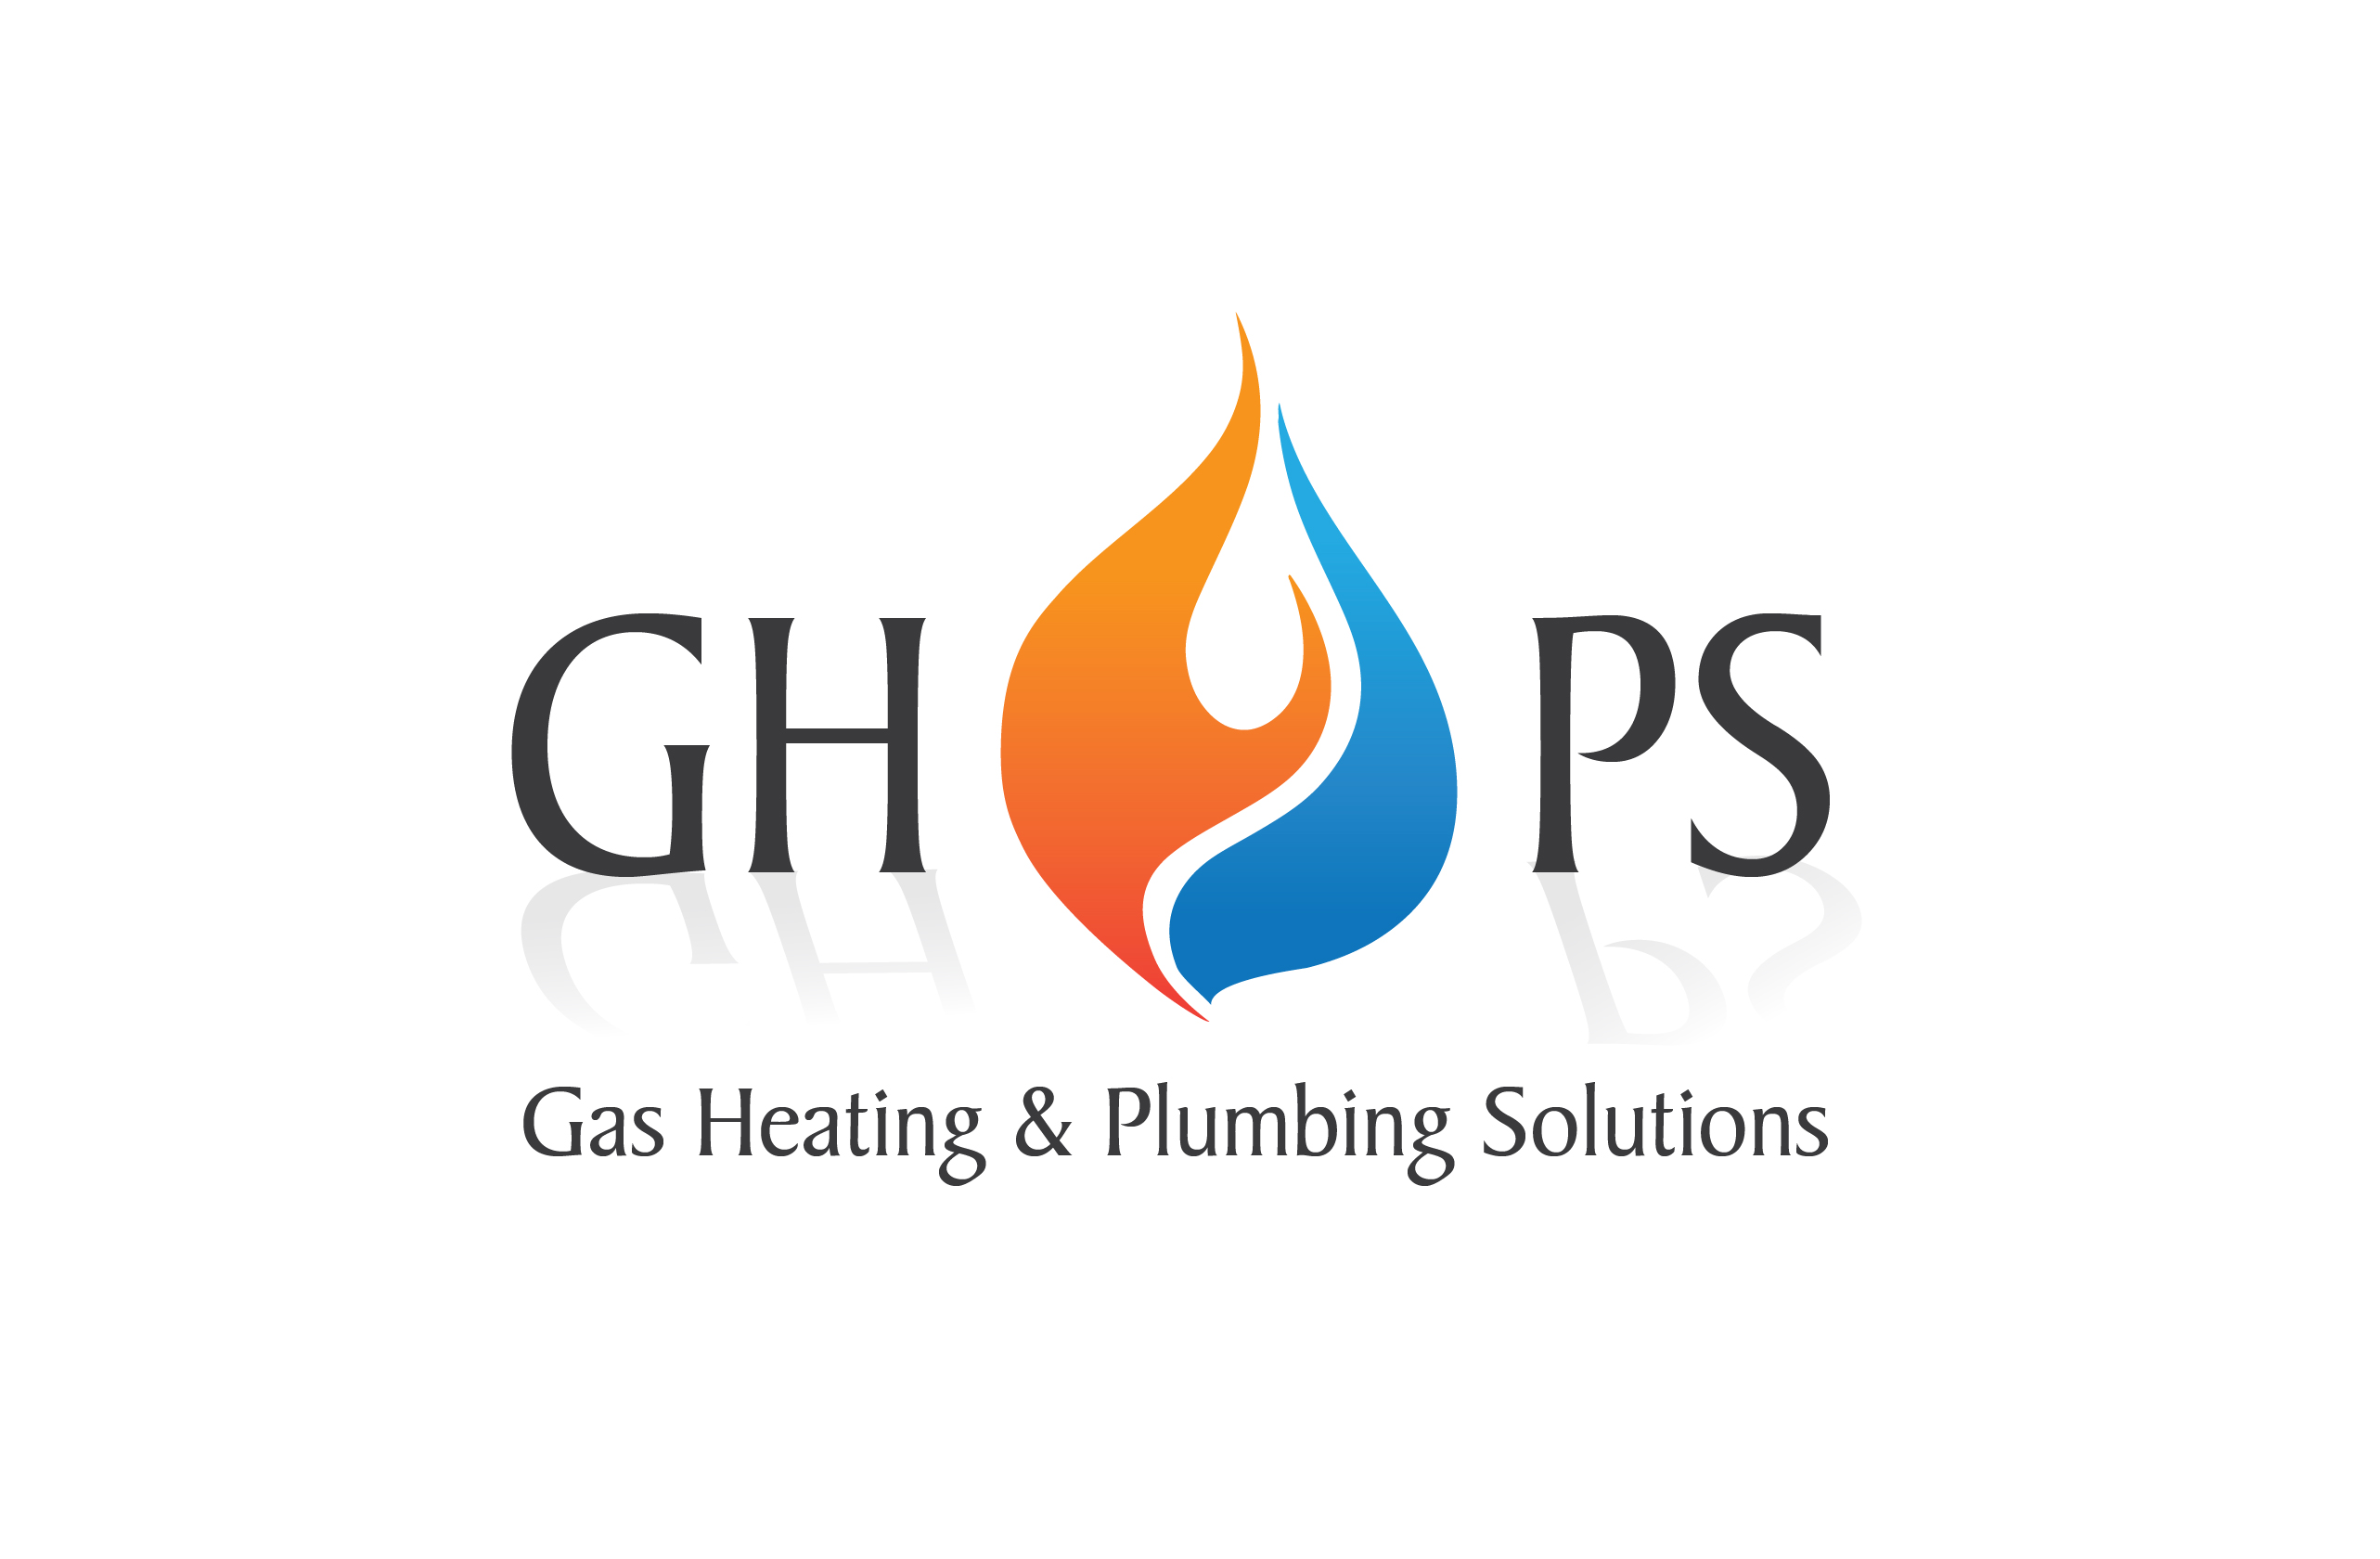 HOS

Gas Heating & Plumbing Solutions